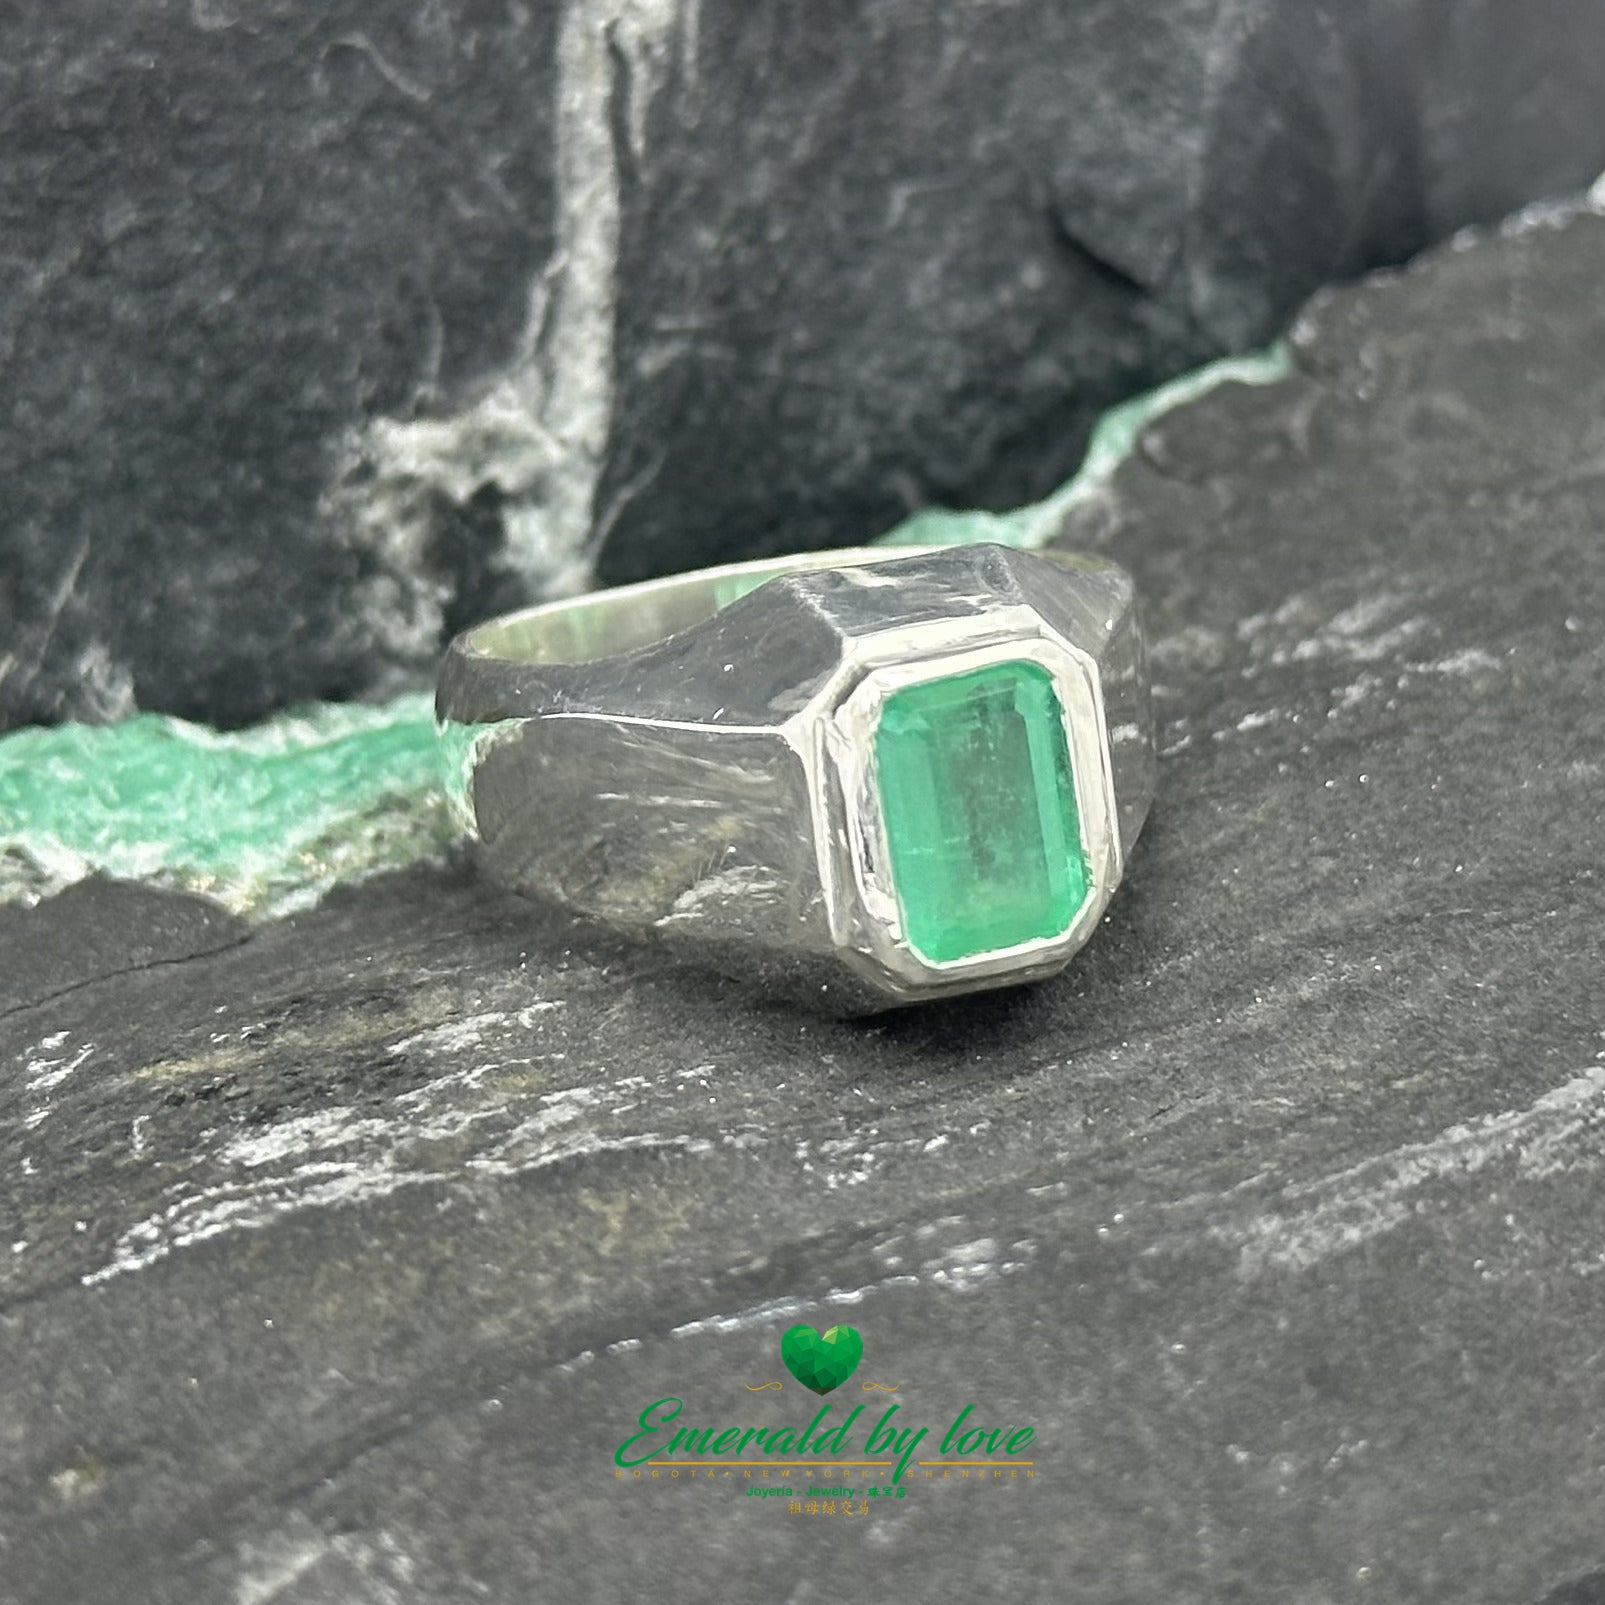 Sophisticated Men's Sterling Silver Ring with Bezel-Set Rectangular Emerald